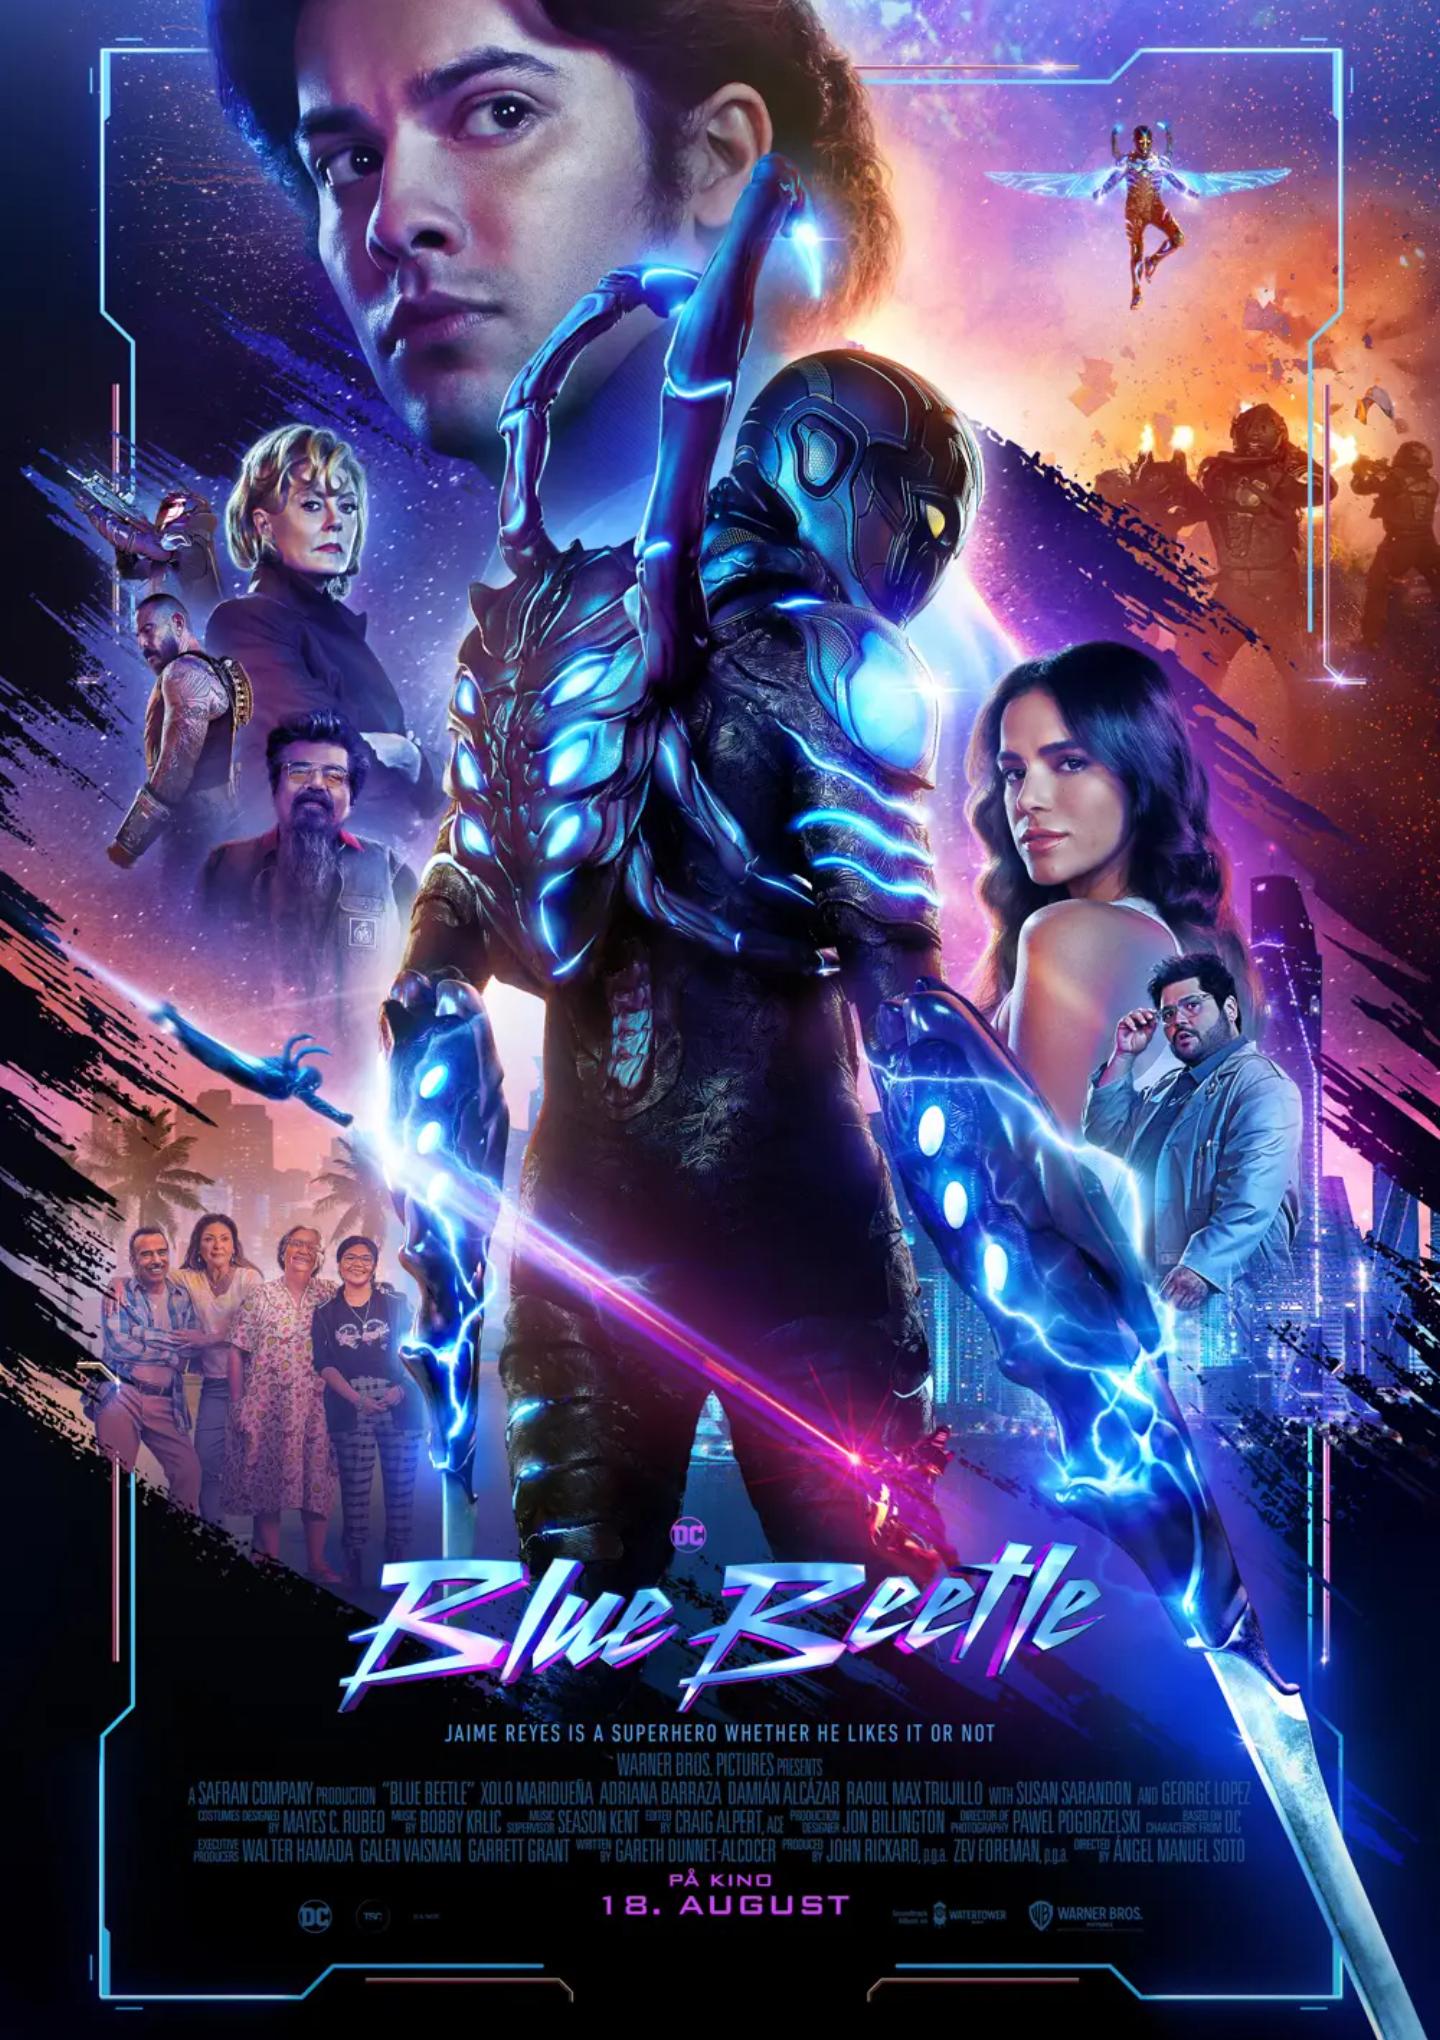 Plakat for 'Blue Beetle'